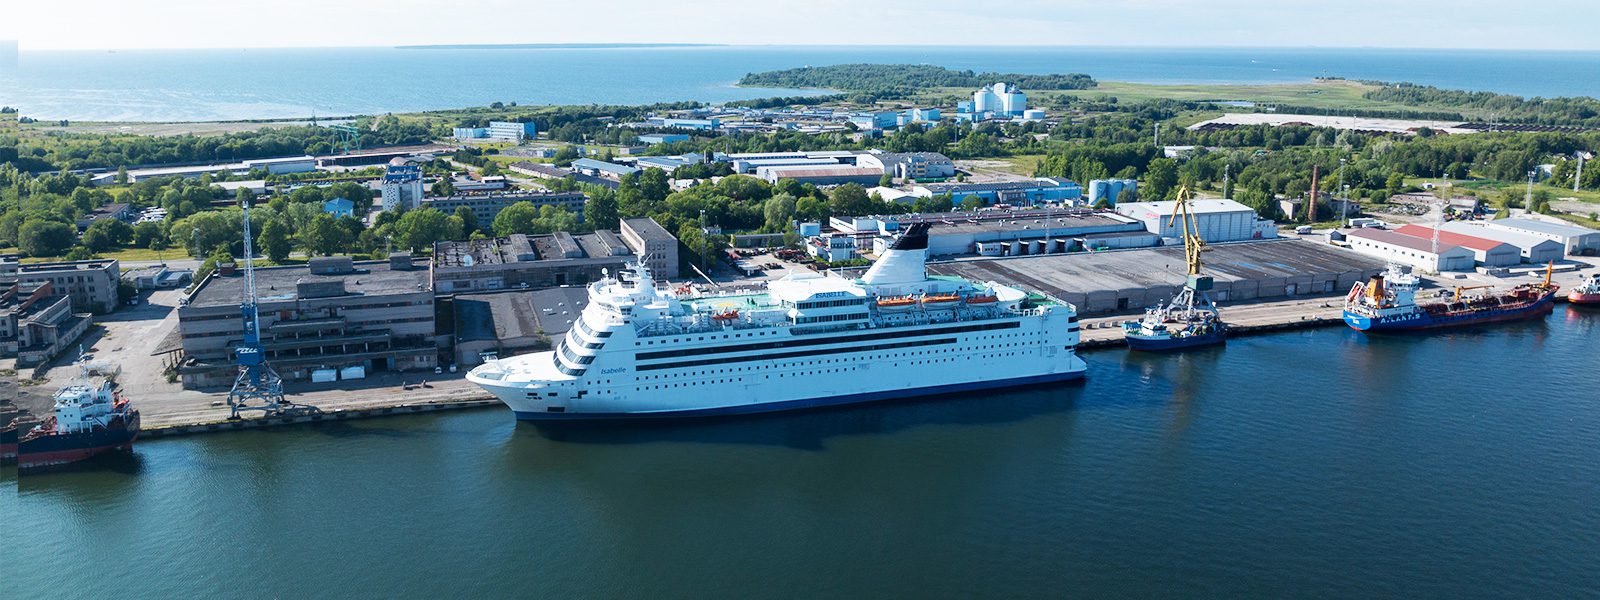 Isabelle ferry in Estonia